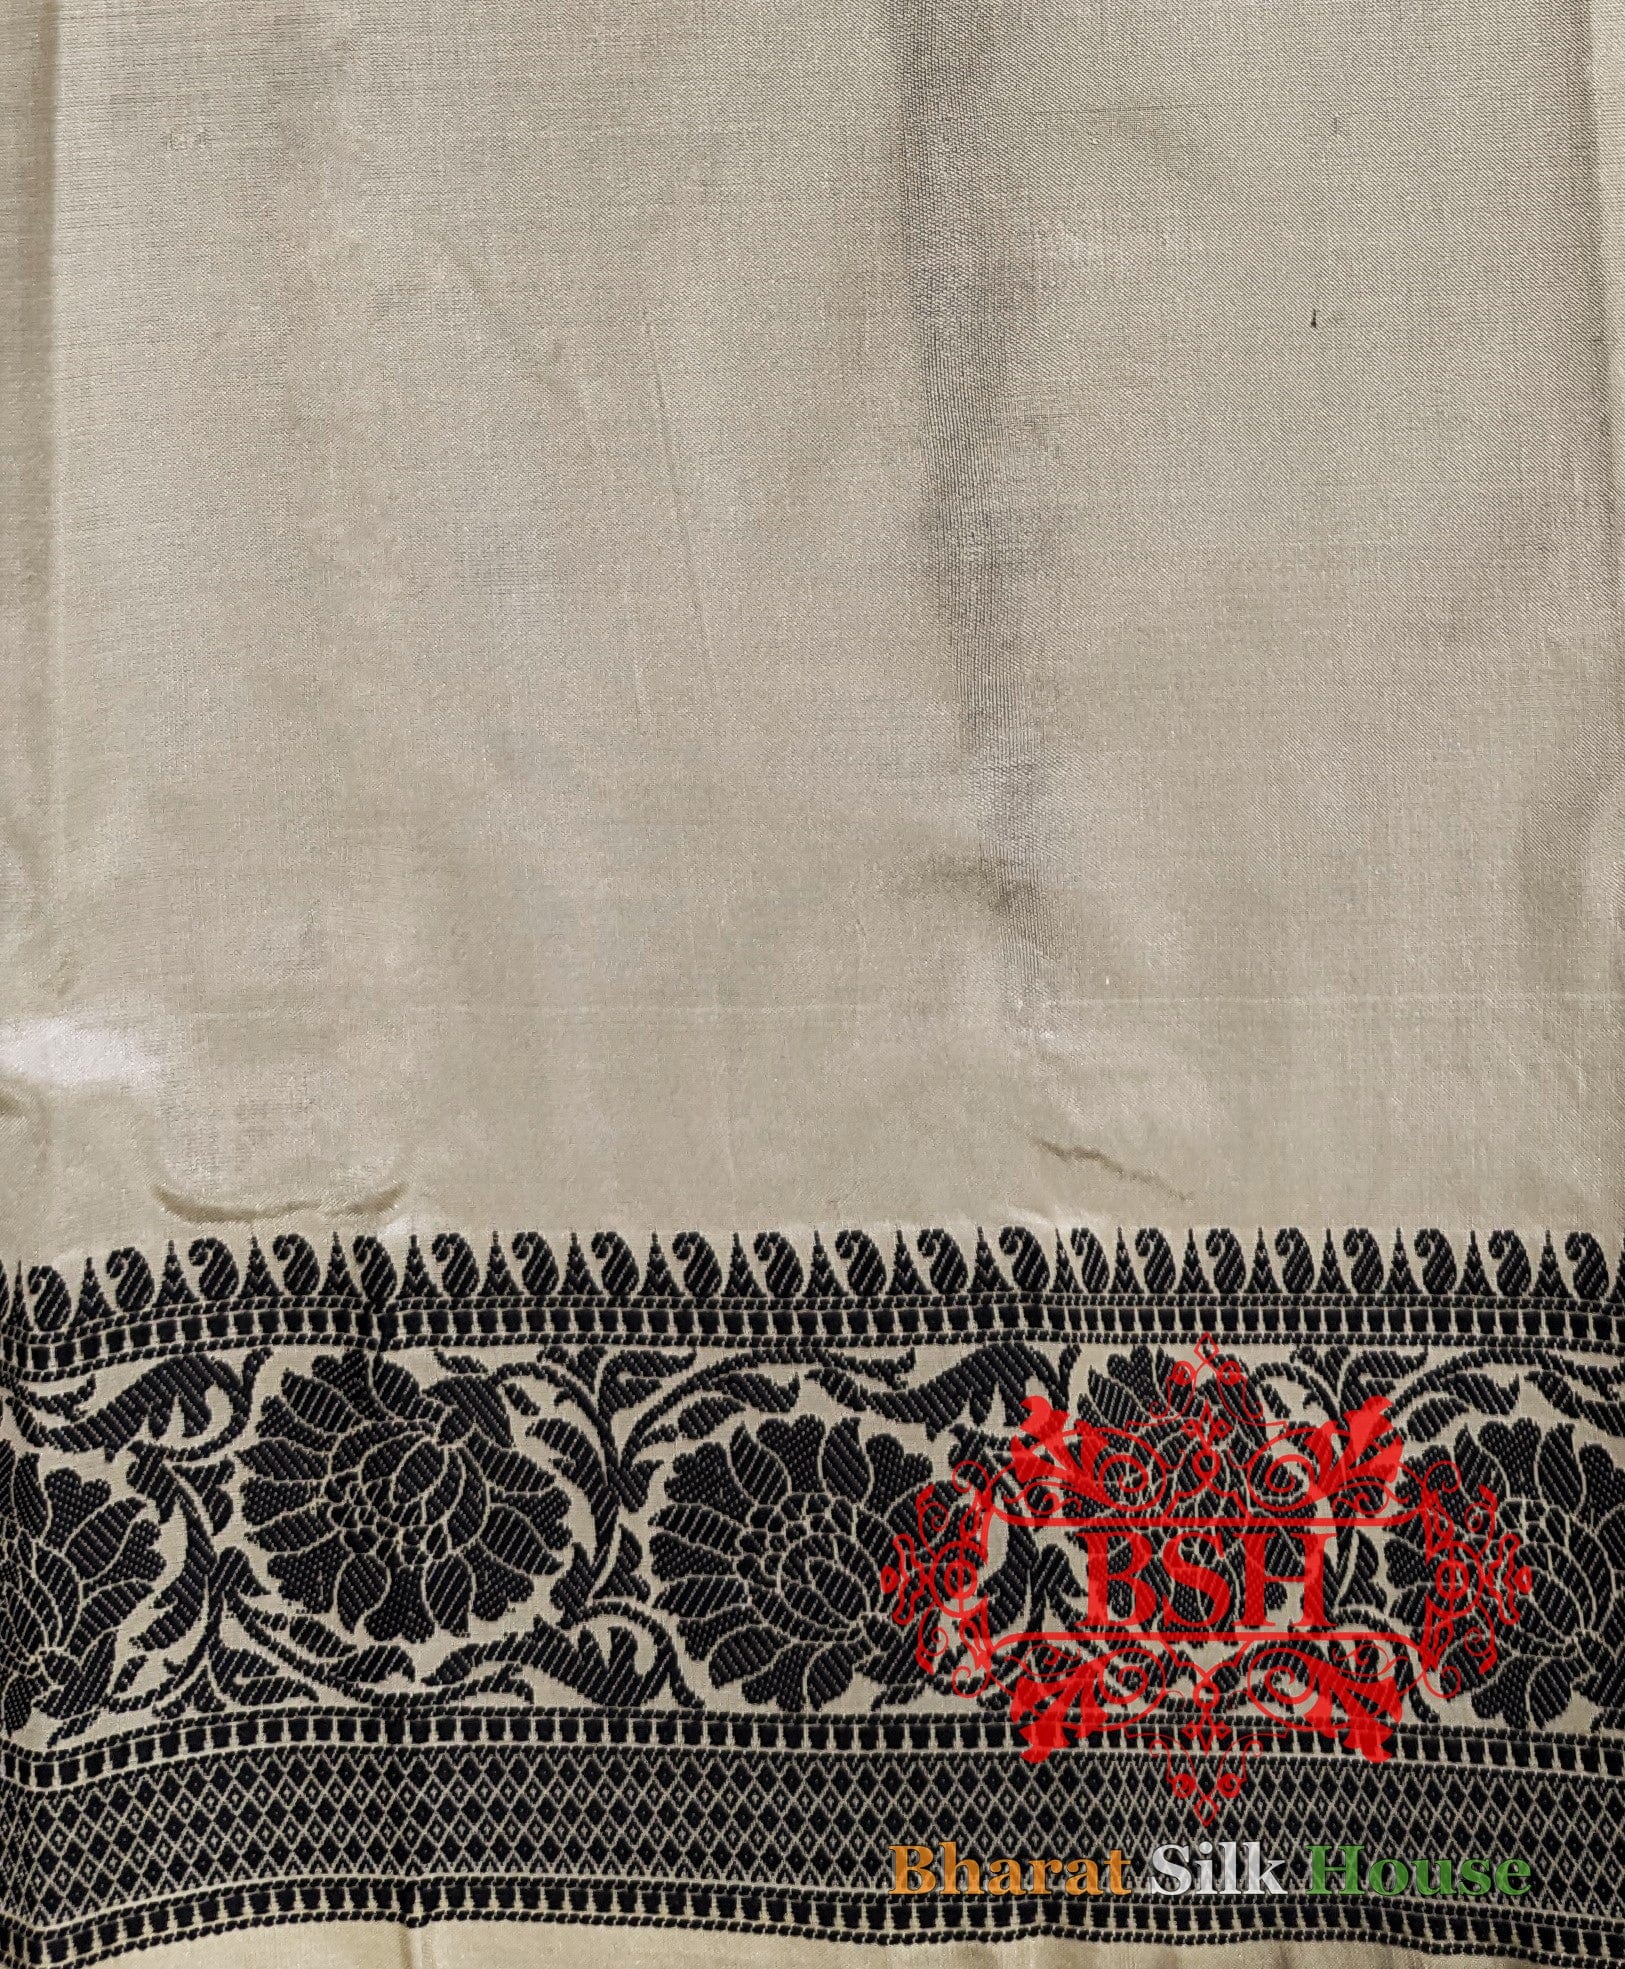 Pure Banrasi  Handloom Katan Silk Antique Zari Saree In Shades Of Beige With Black Border Pure Kataan Silk Bharat Silk House